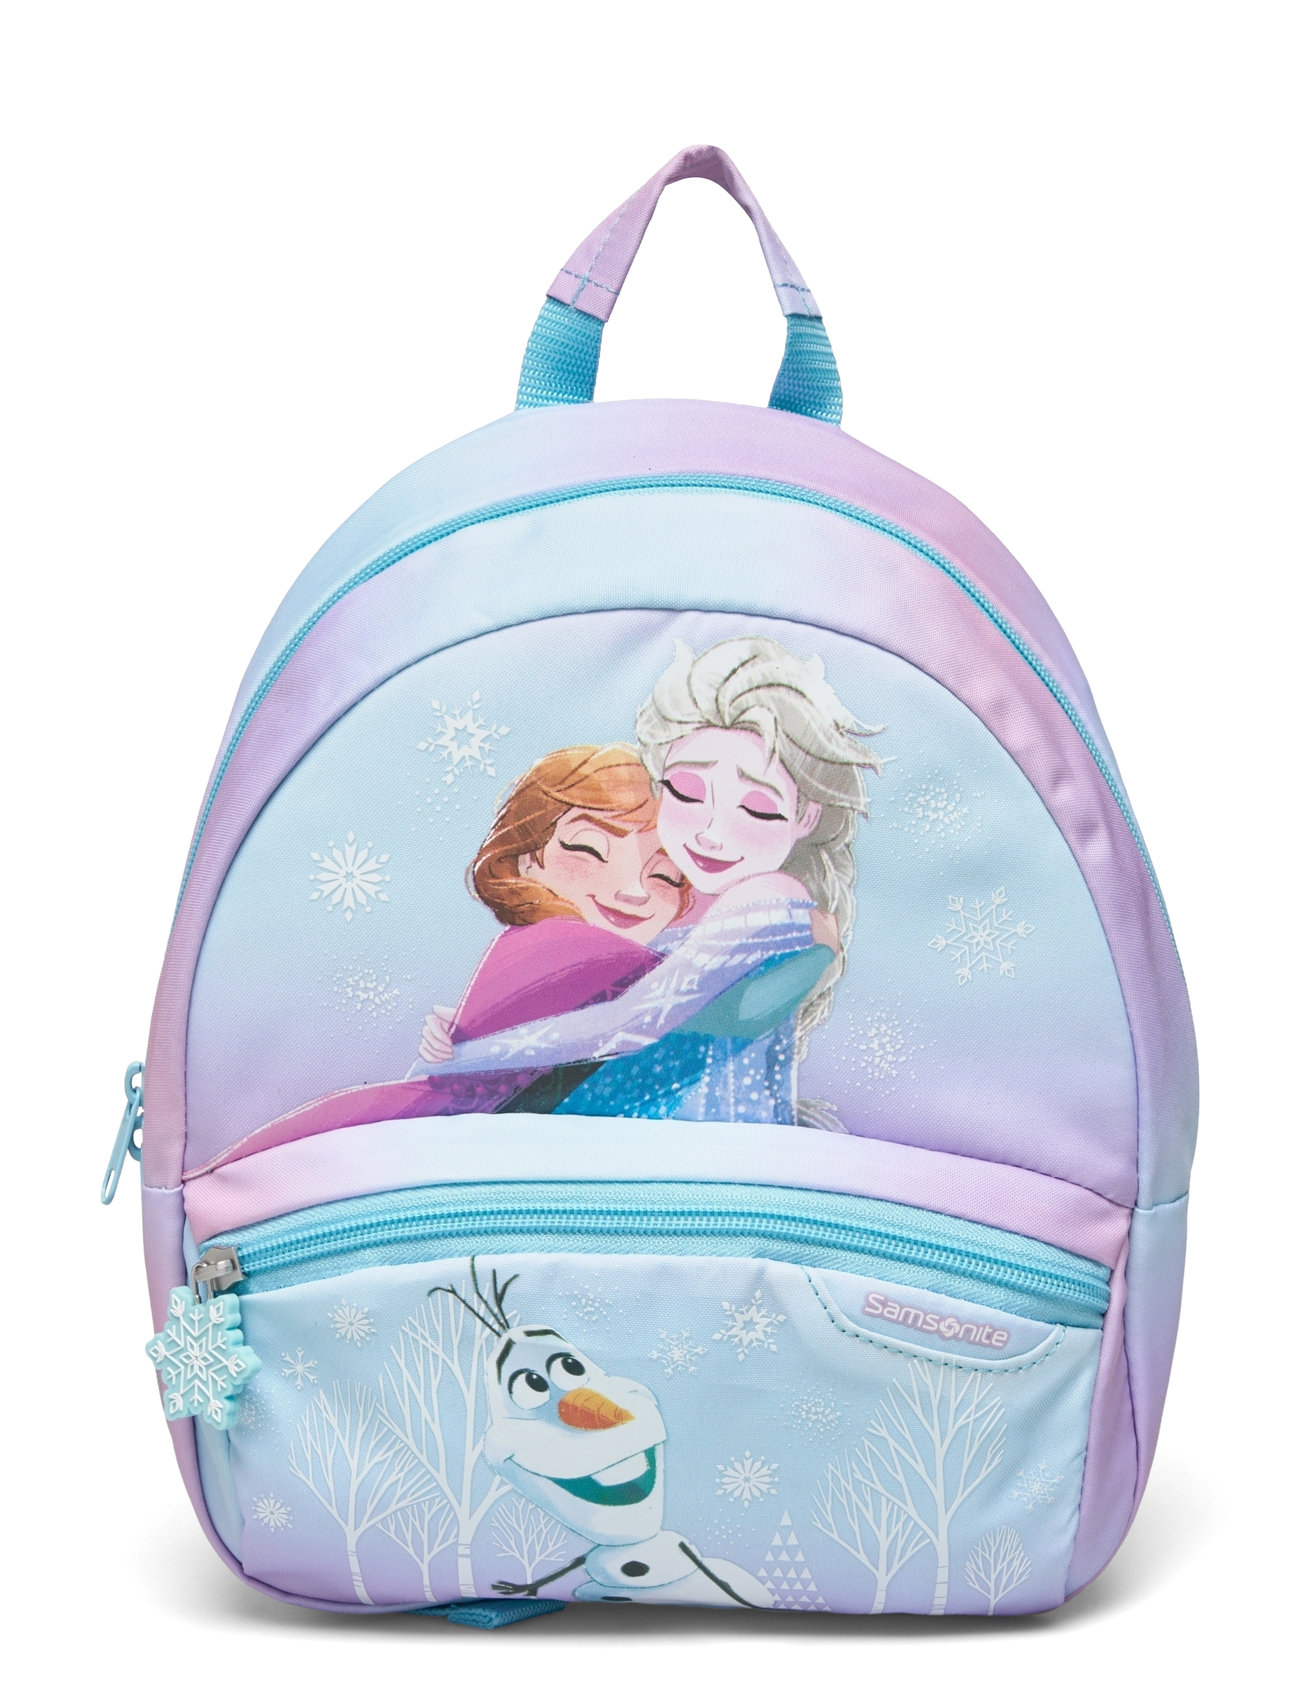 Disney Ultimate Disney Frozen Backpack S Ryggsäck Väska Multi/patterned Samsonite